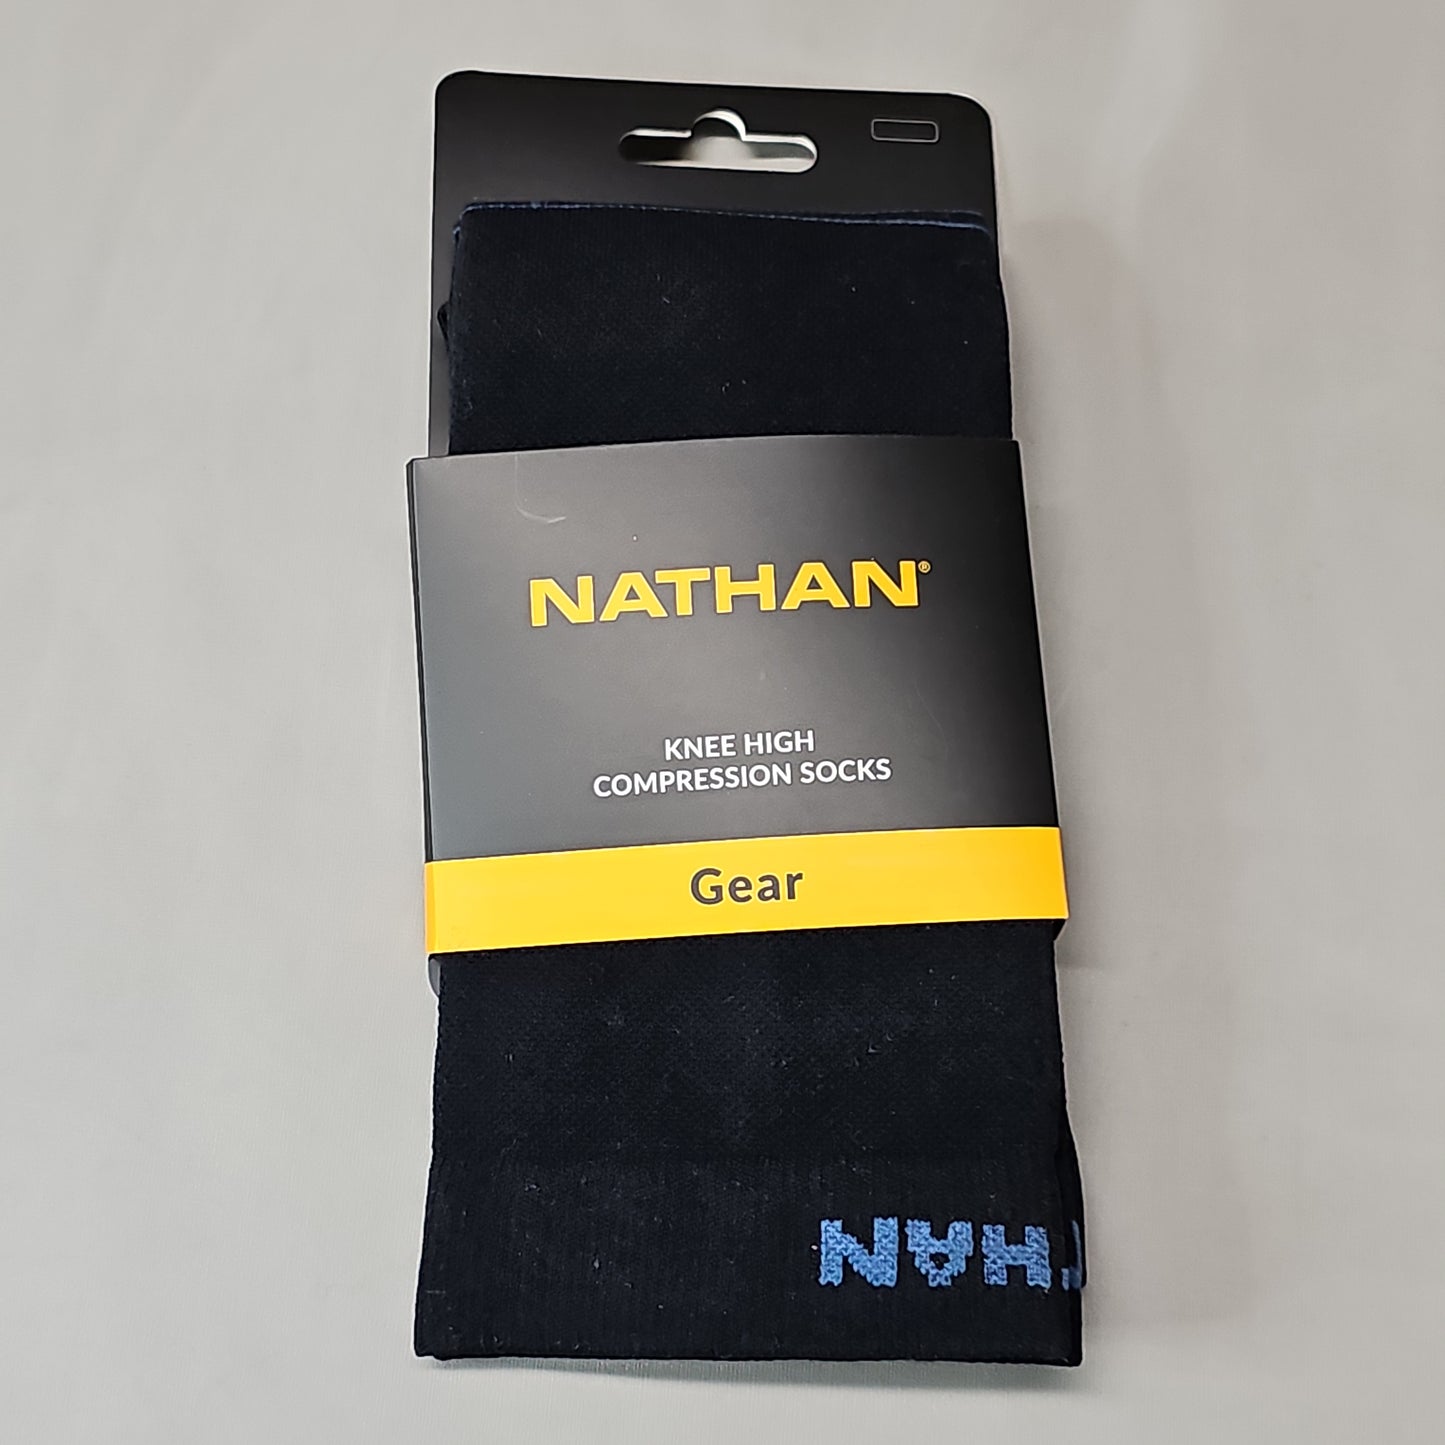 NATHAN Speed Knee High Compression Socks Sz M Black NS10660-00001-M (New)